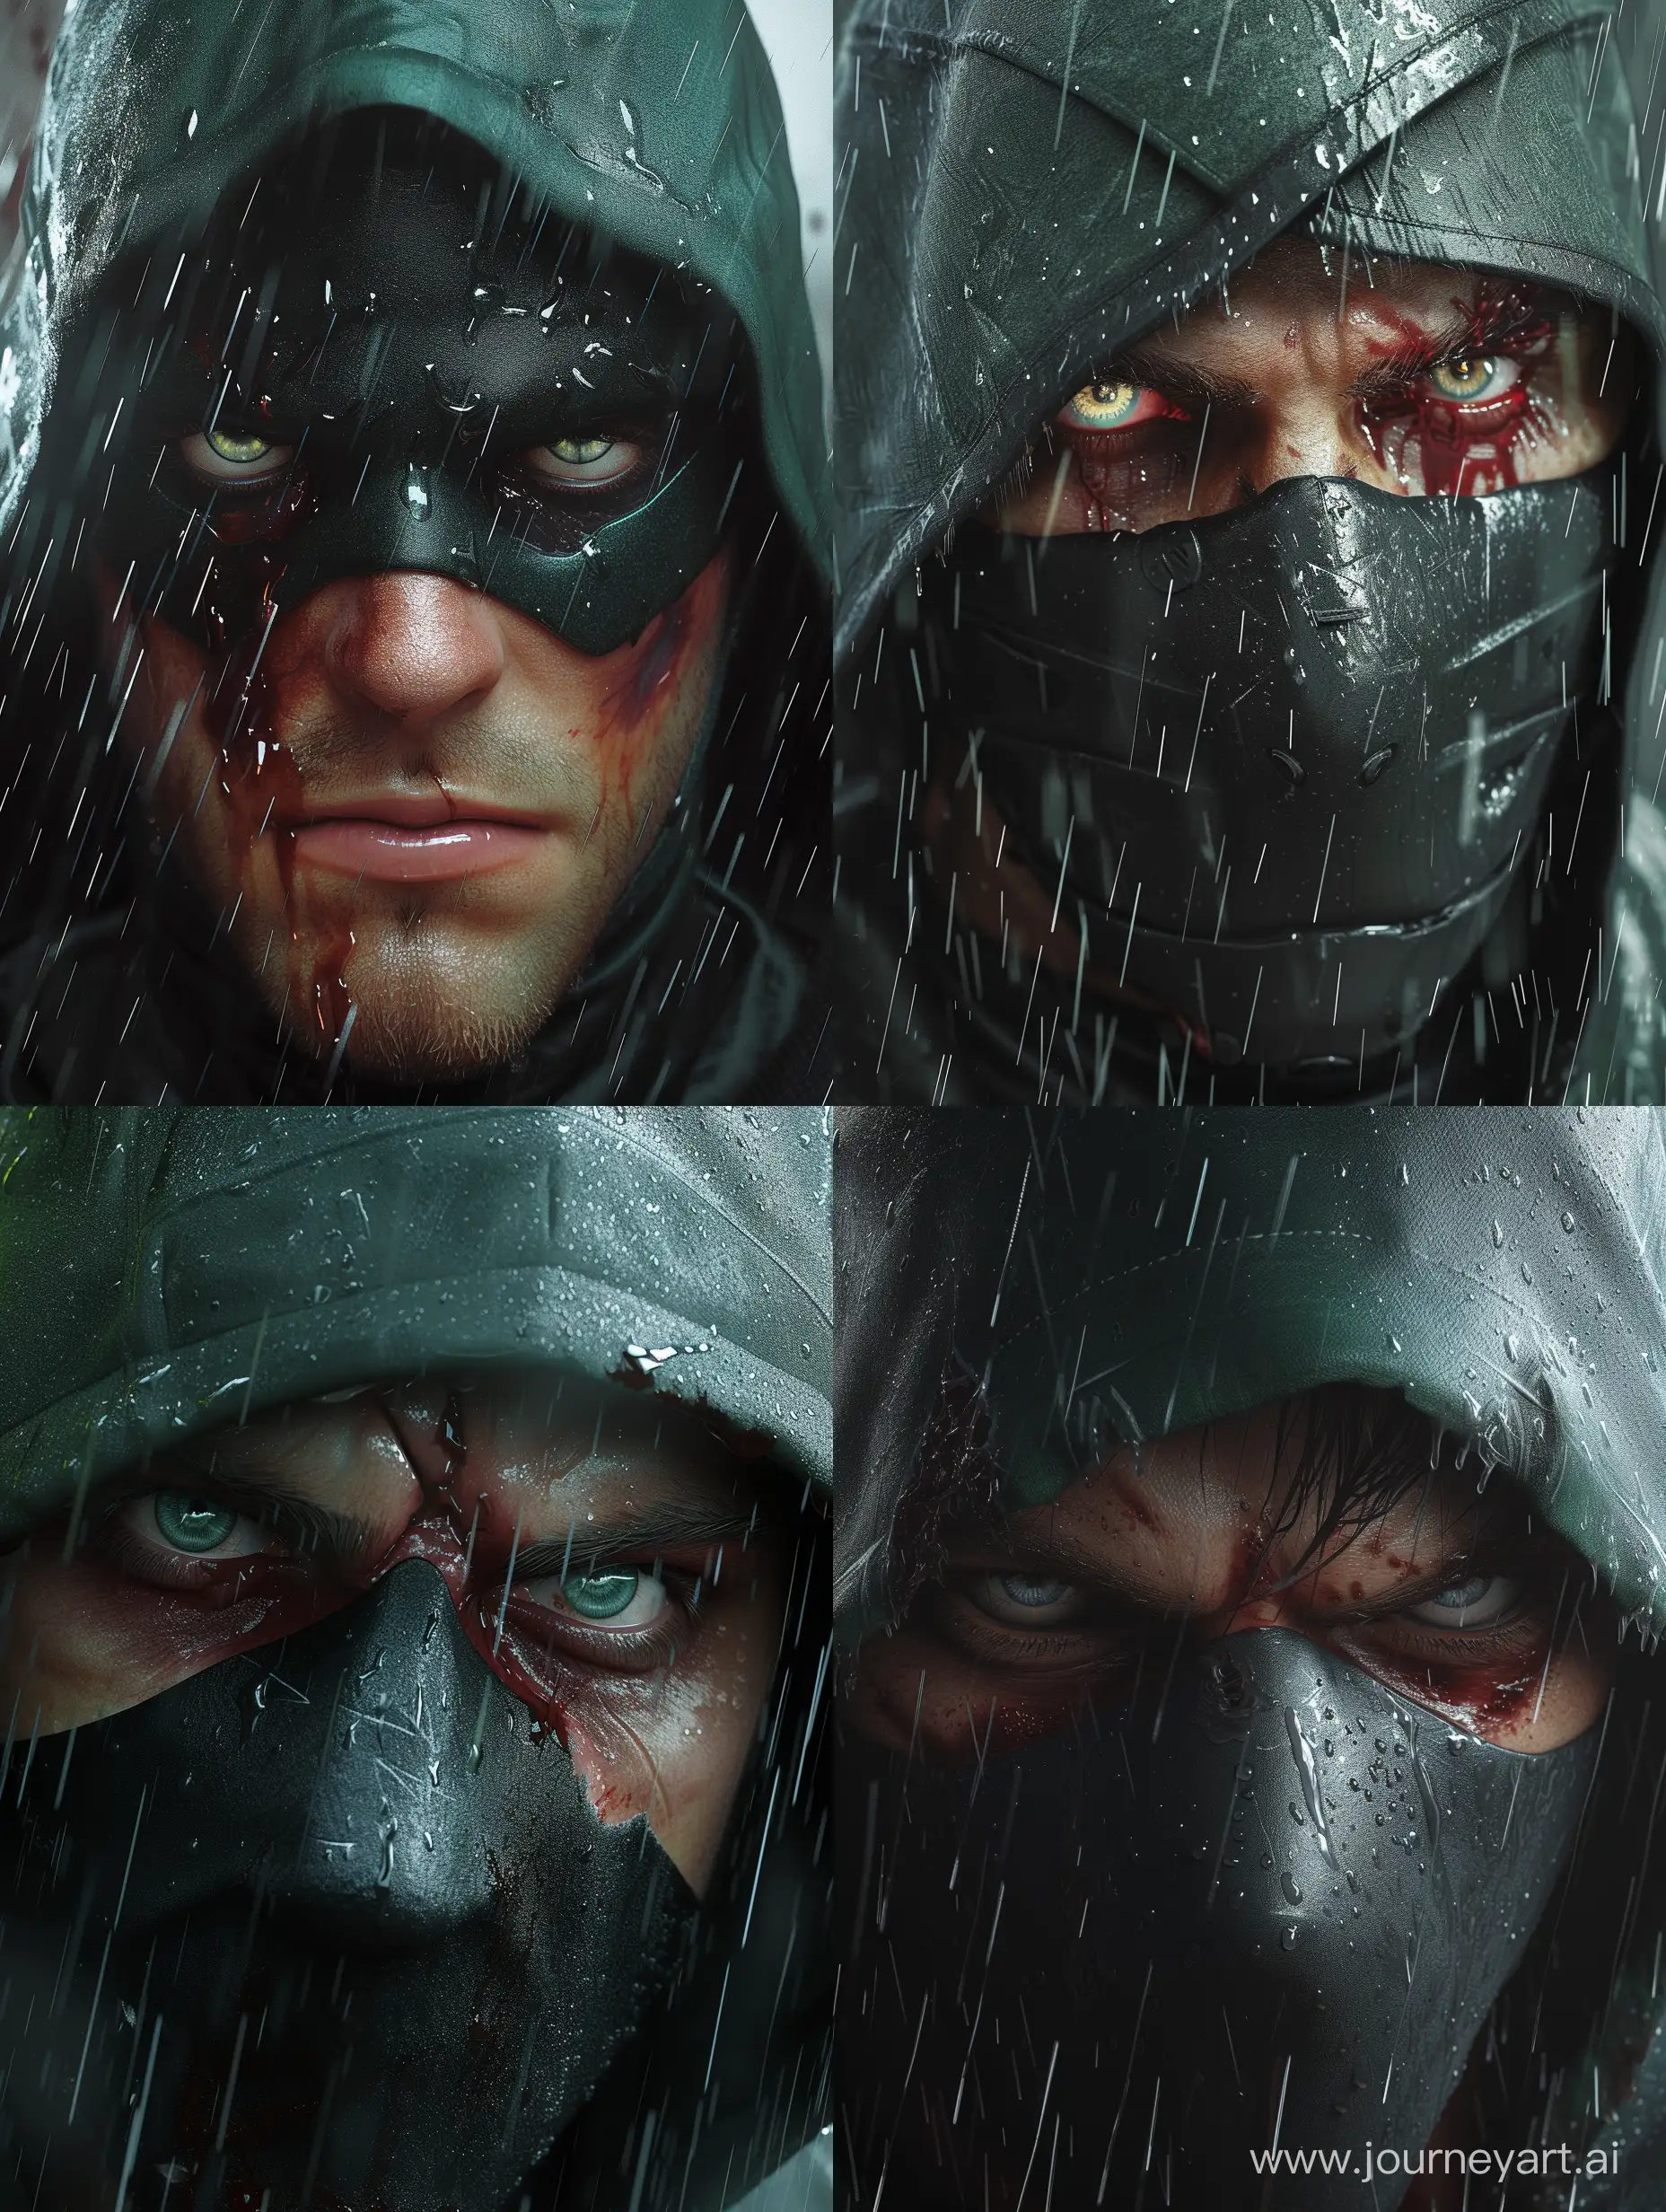 Mysterious-Vigilante-Endures-Torrential-Rain-in-Striking-HyperRealistic-Portrait